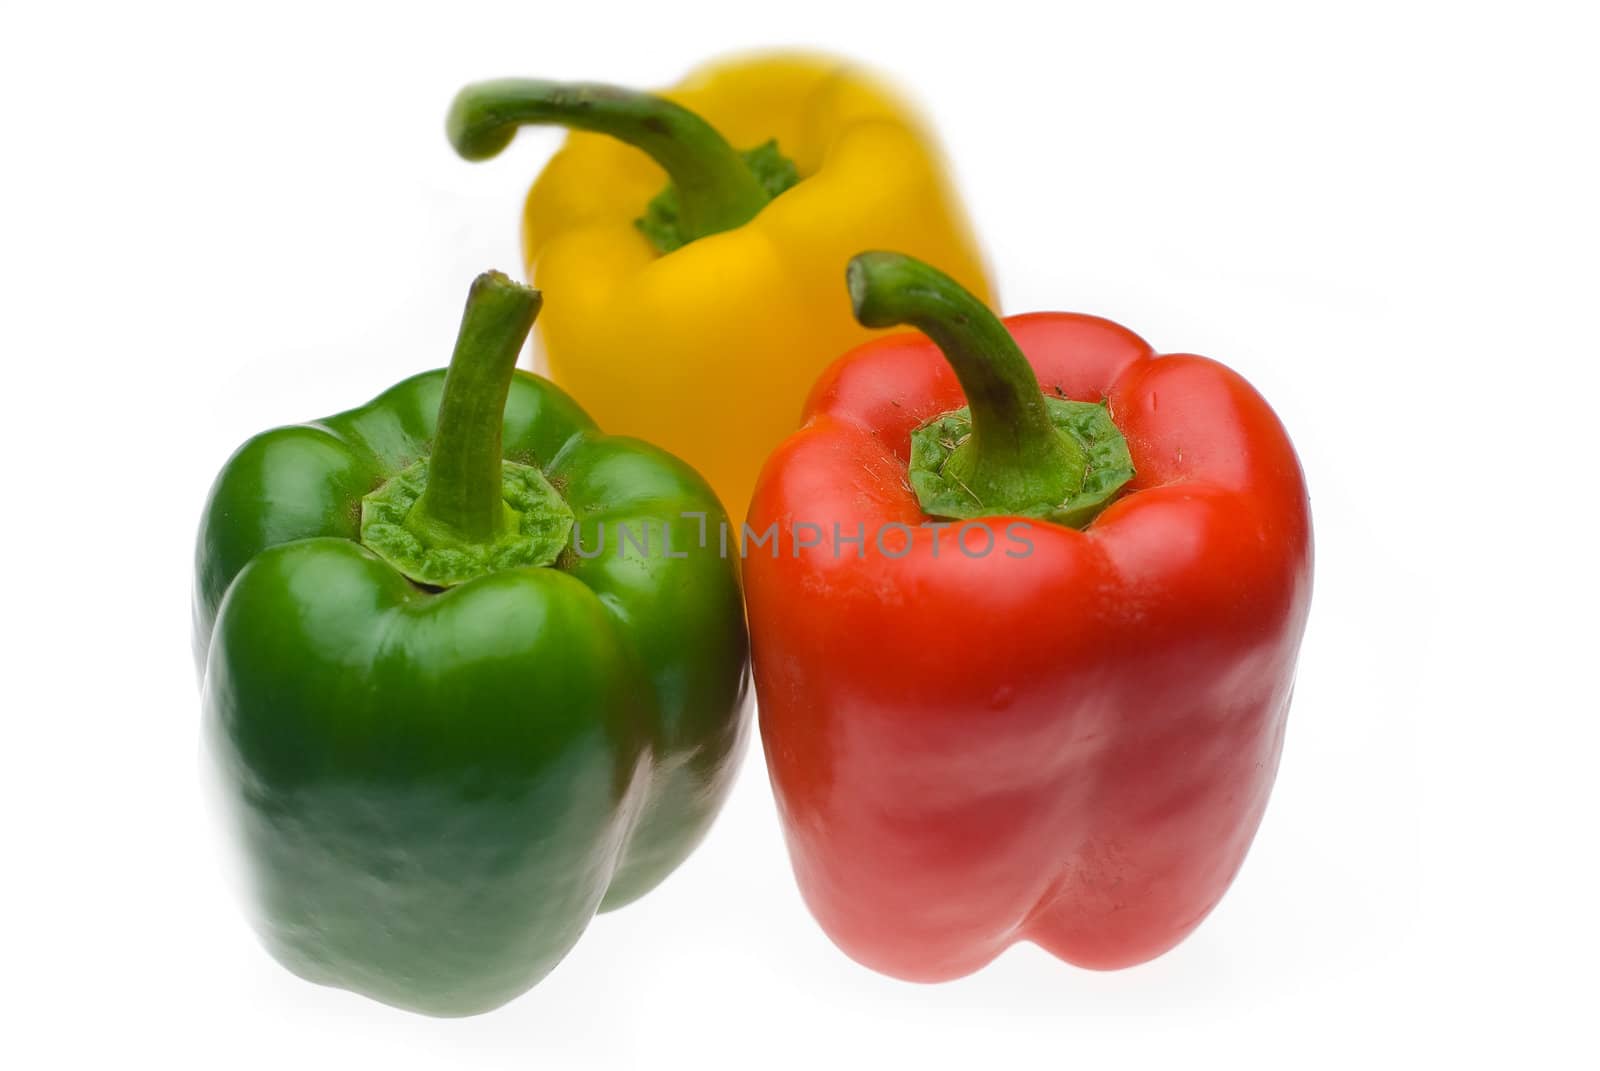 fresh bell peppers by keko64